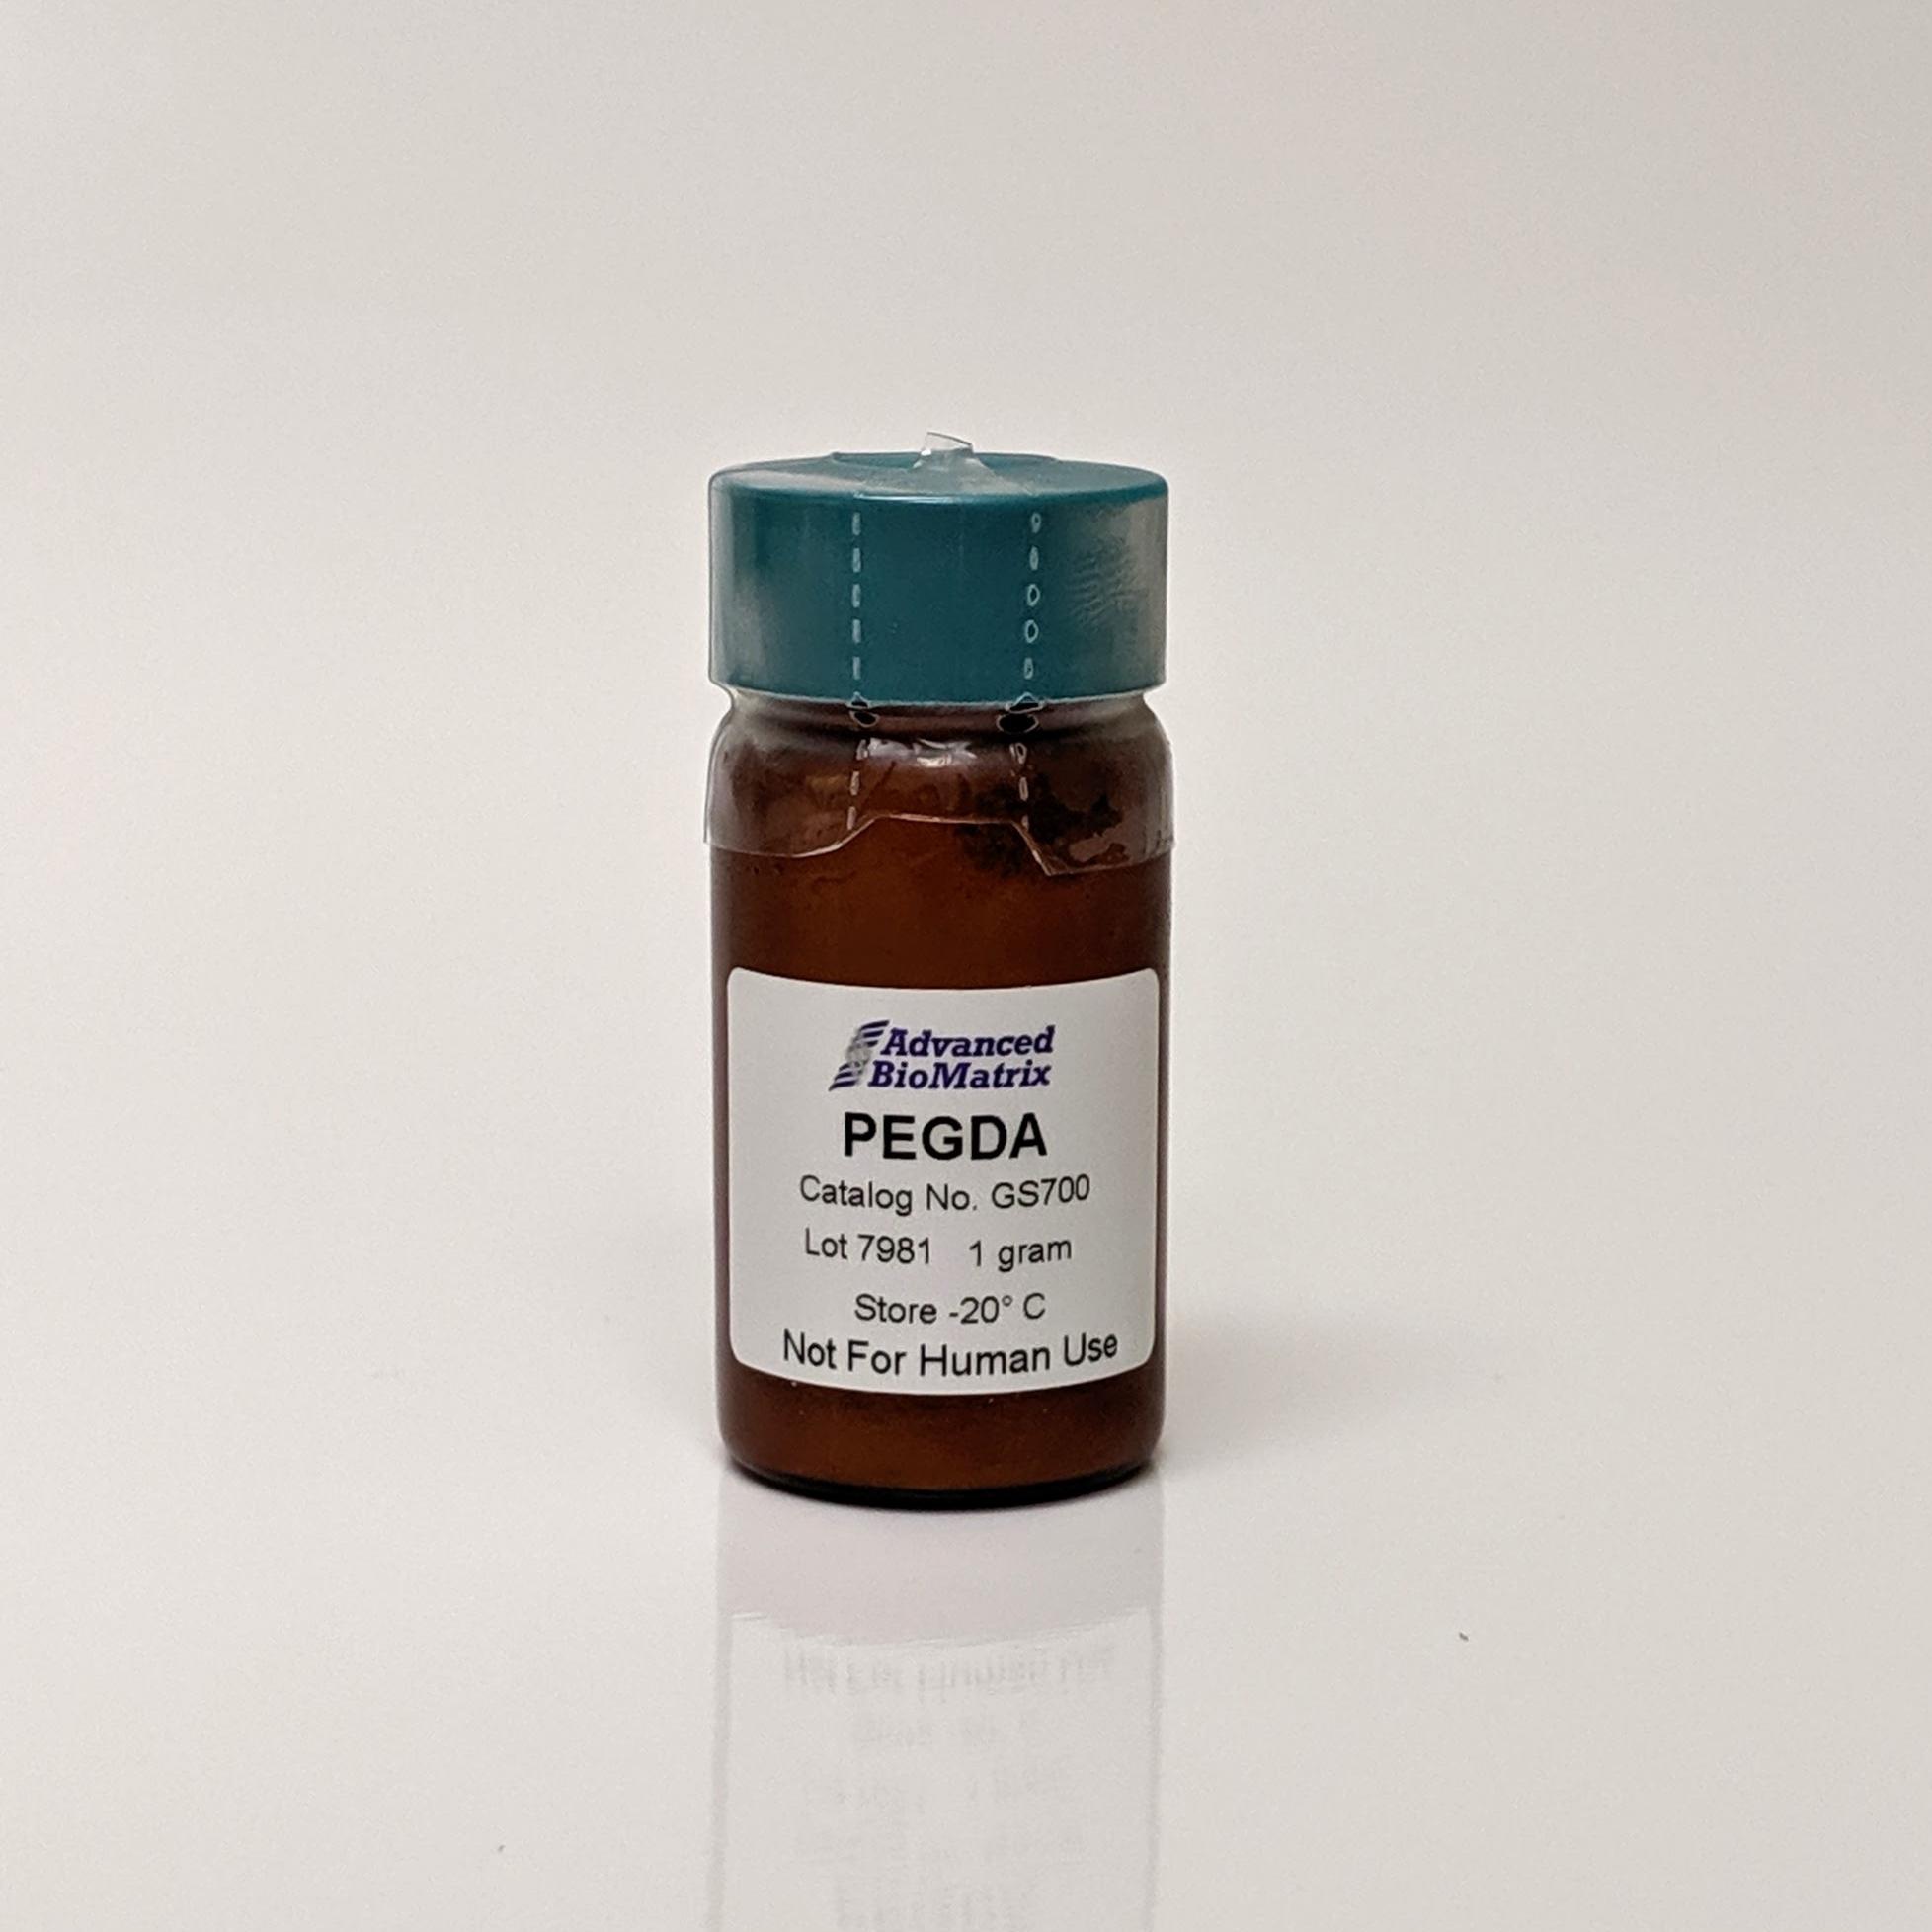 PEGDA powder from advanced biomatrix